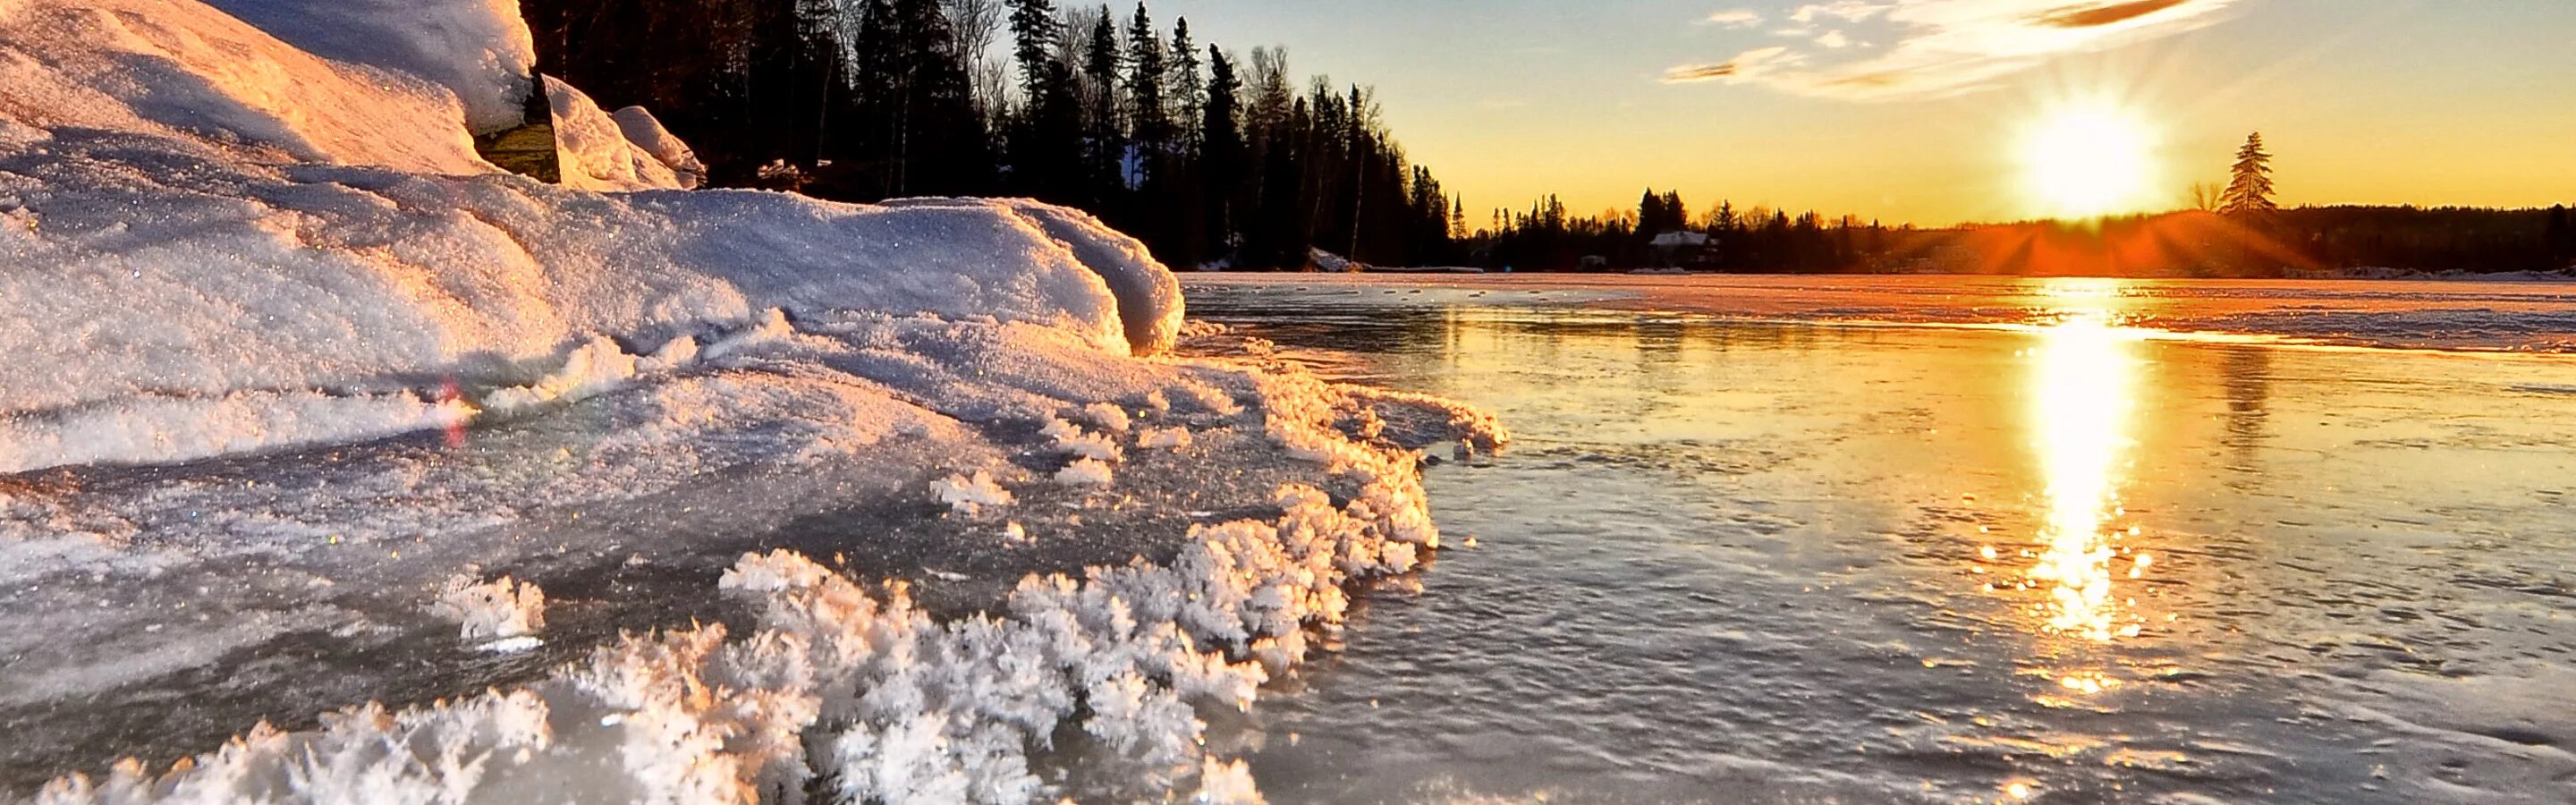 Снег на солнце на озере. Лед блестит. Озеро снег огонь Relax. Cold north